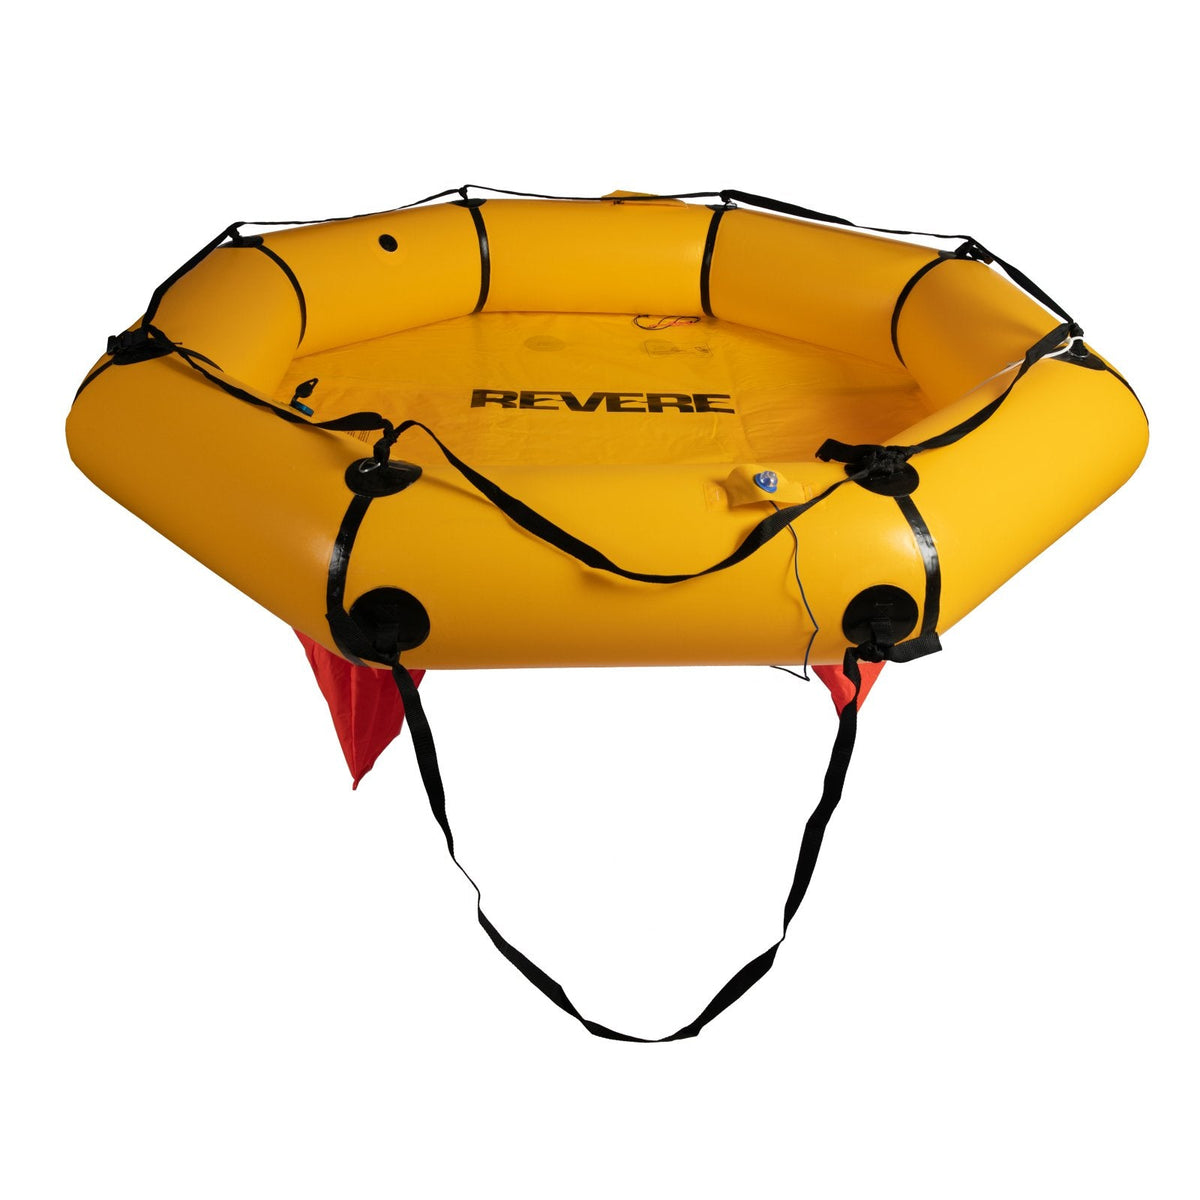 revere-coastal-compact-life-raft-2-6-person-valise-bag-life-raft